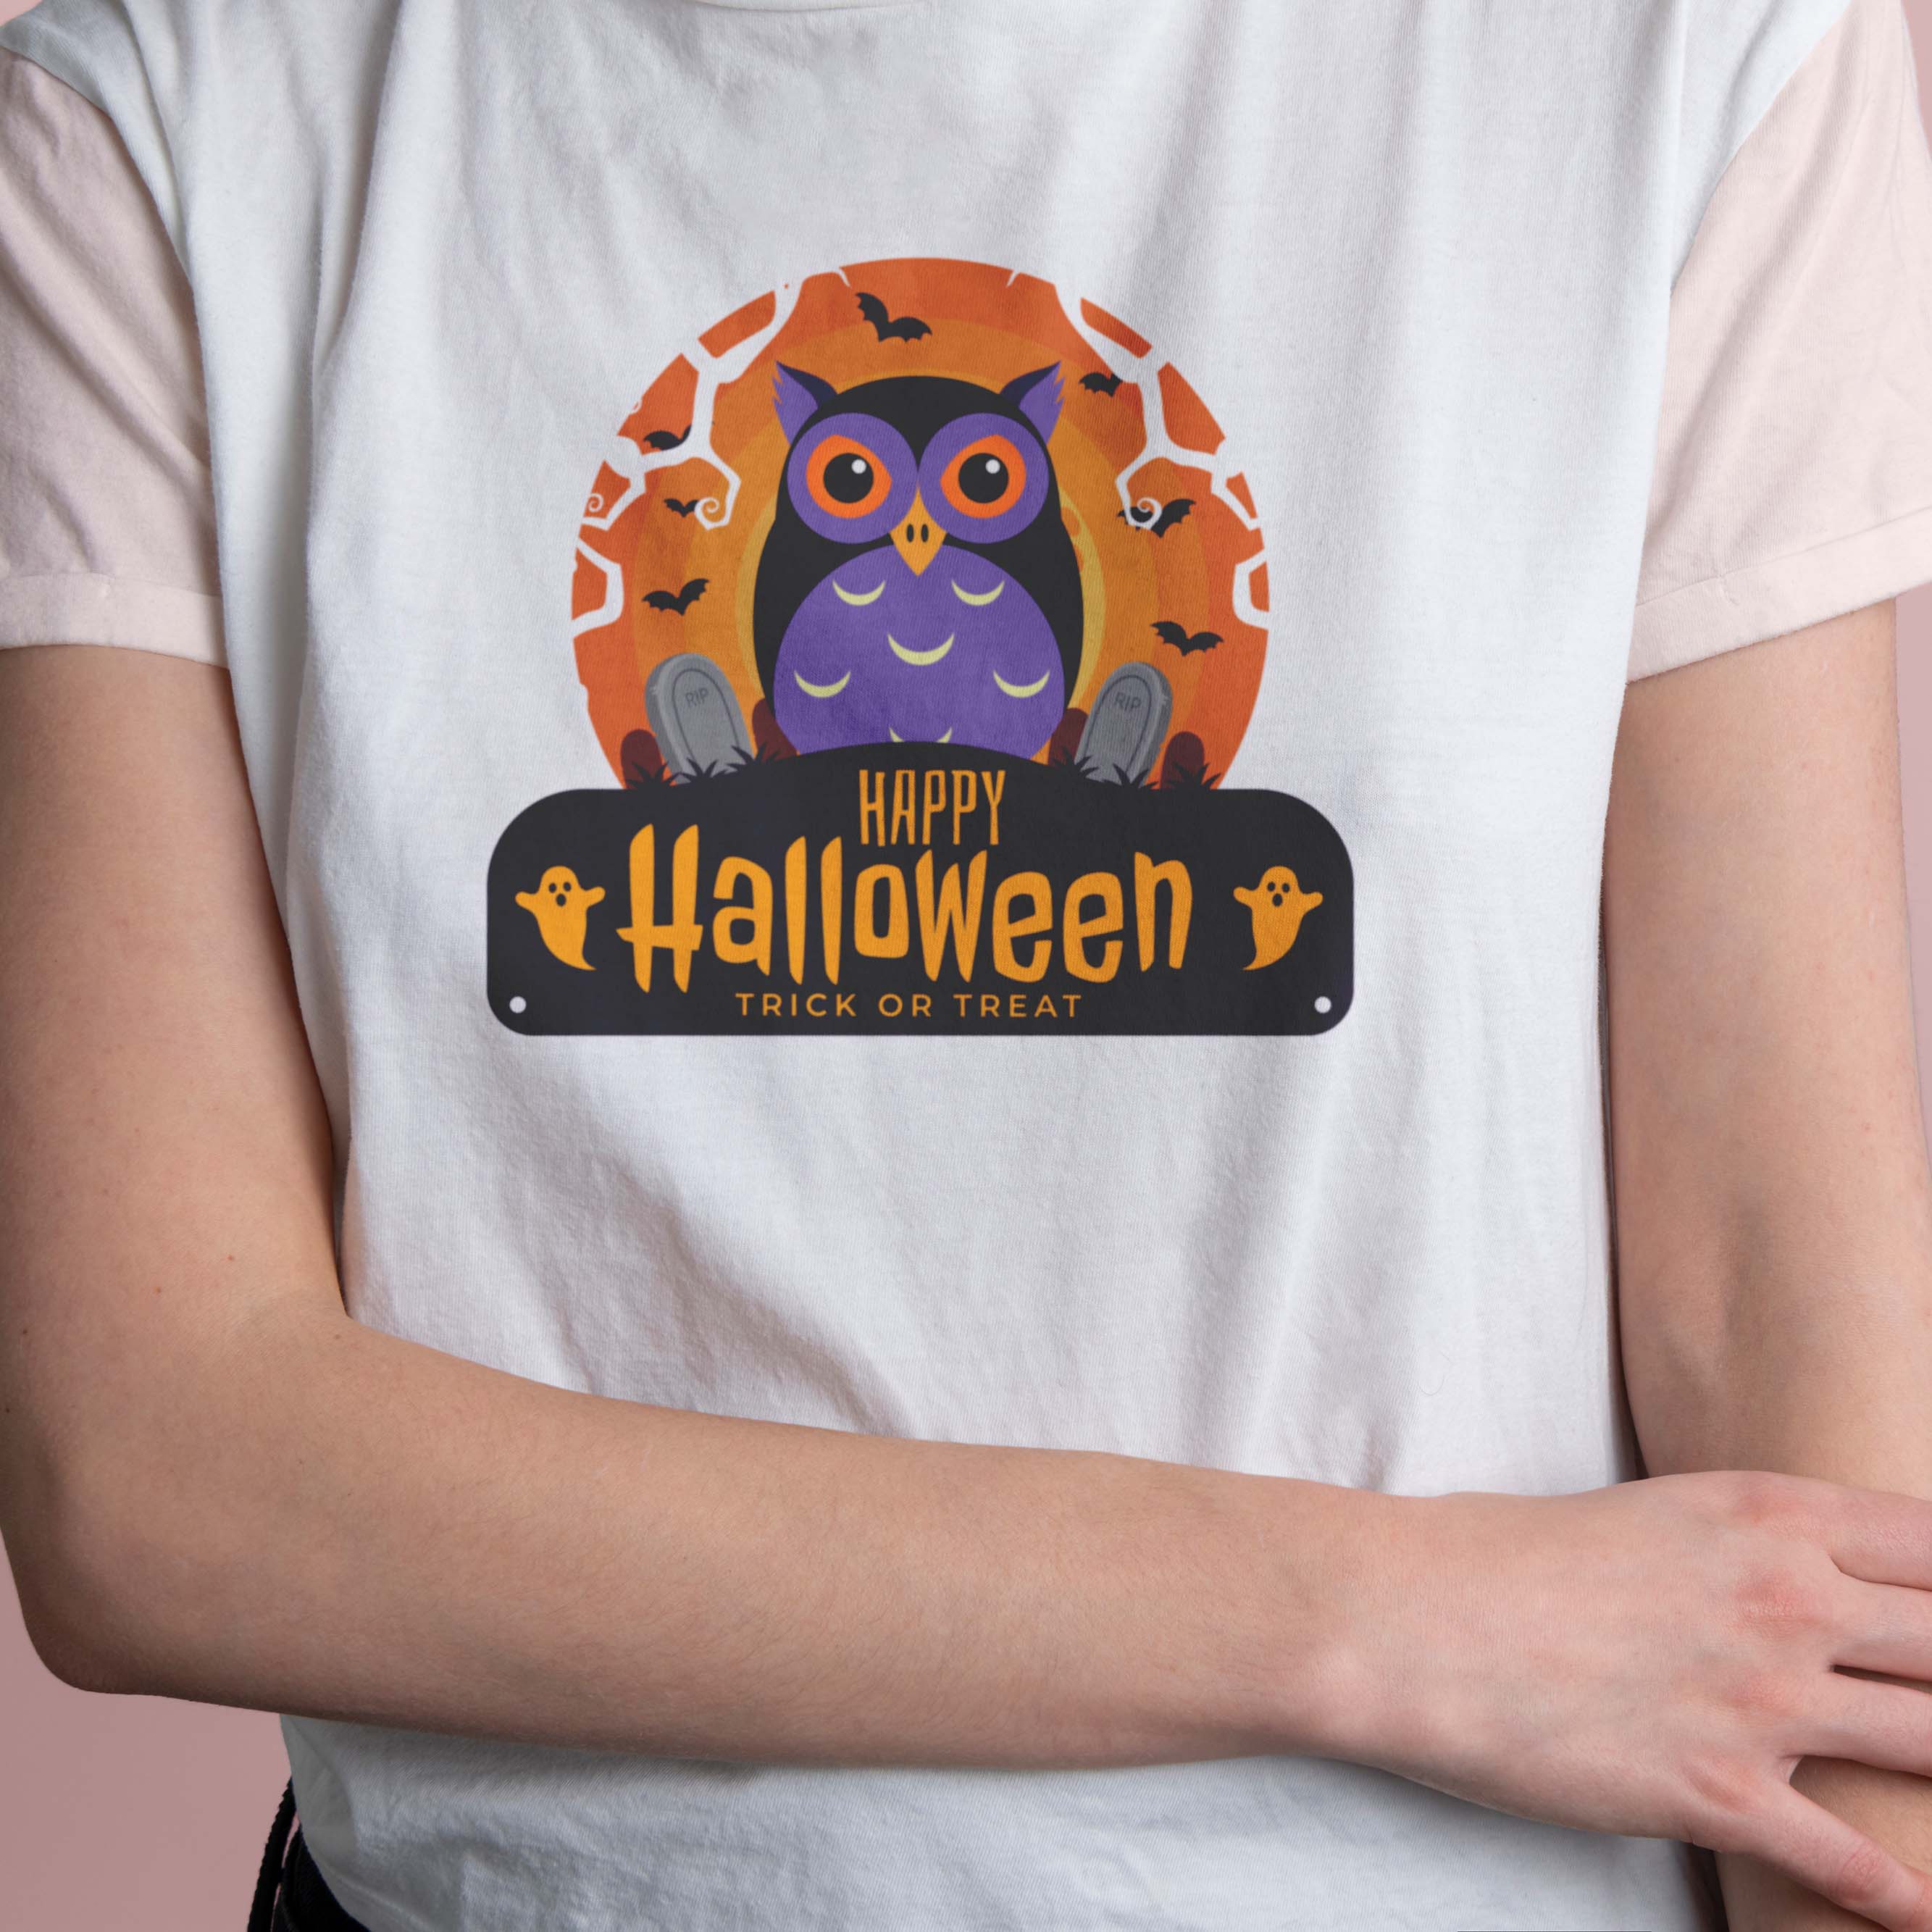 Halloween Scary T-shirt Design main image.